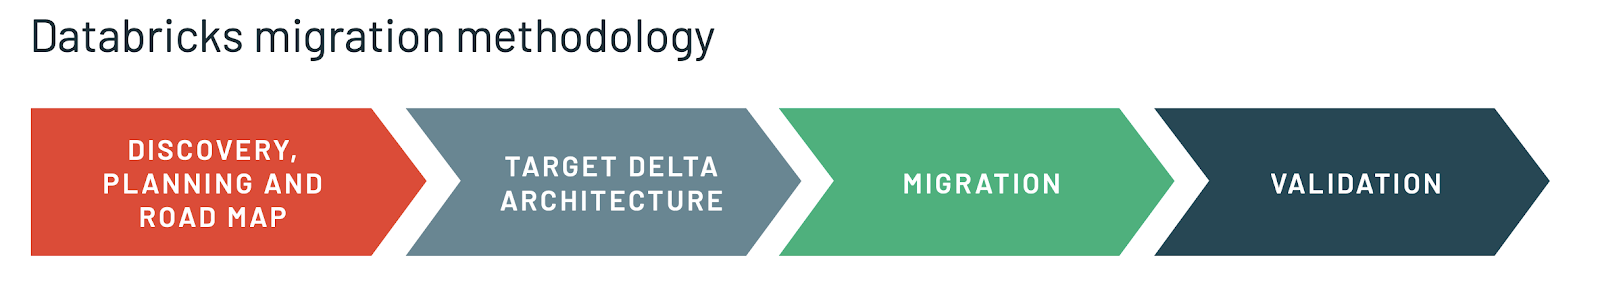 Databricks migration methodology